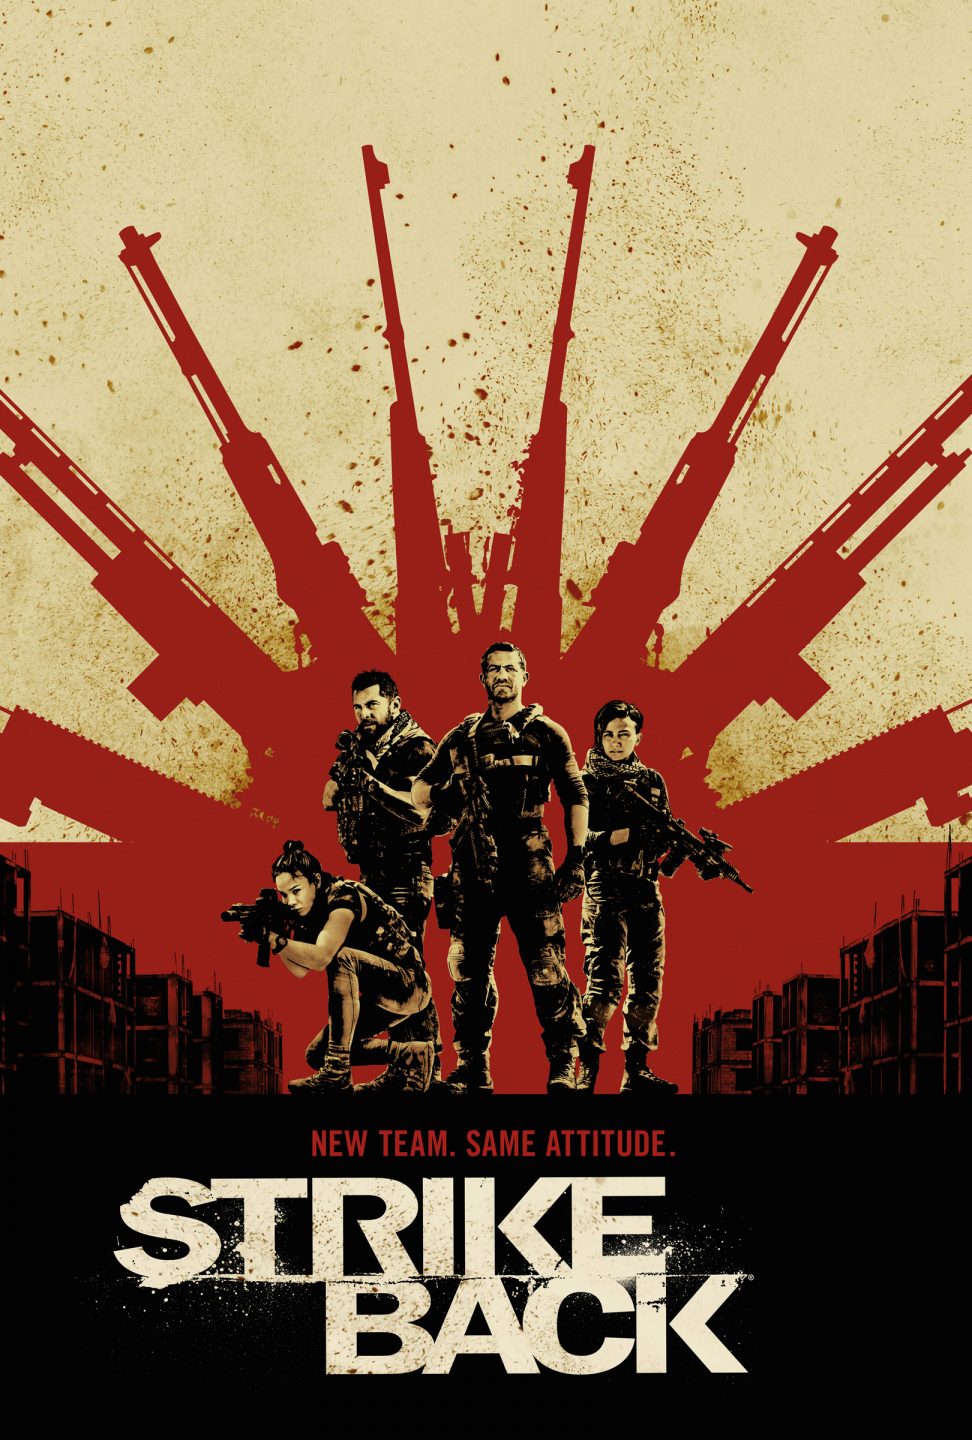 Strike Back: The Complete Fifth Season art (HBO)